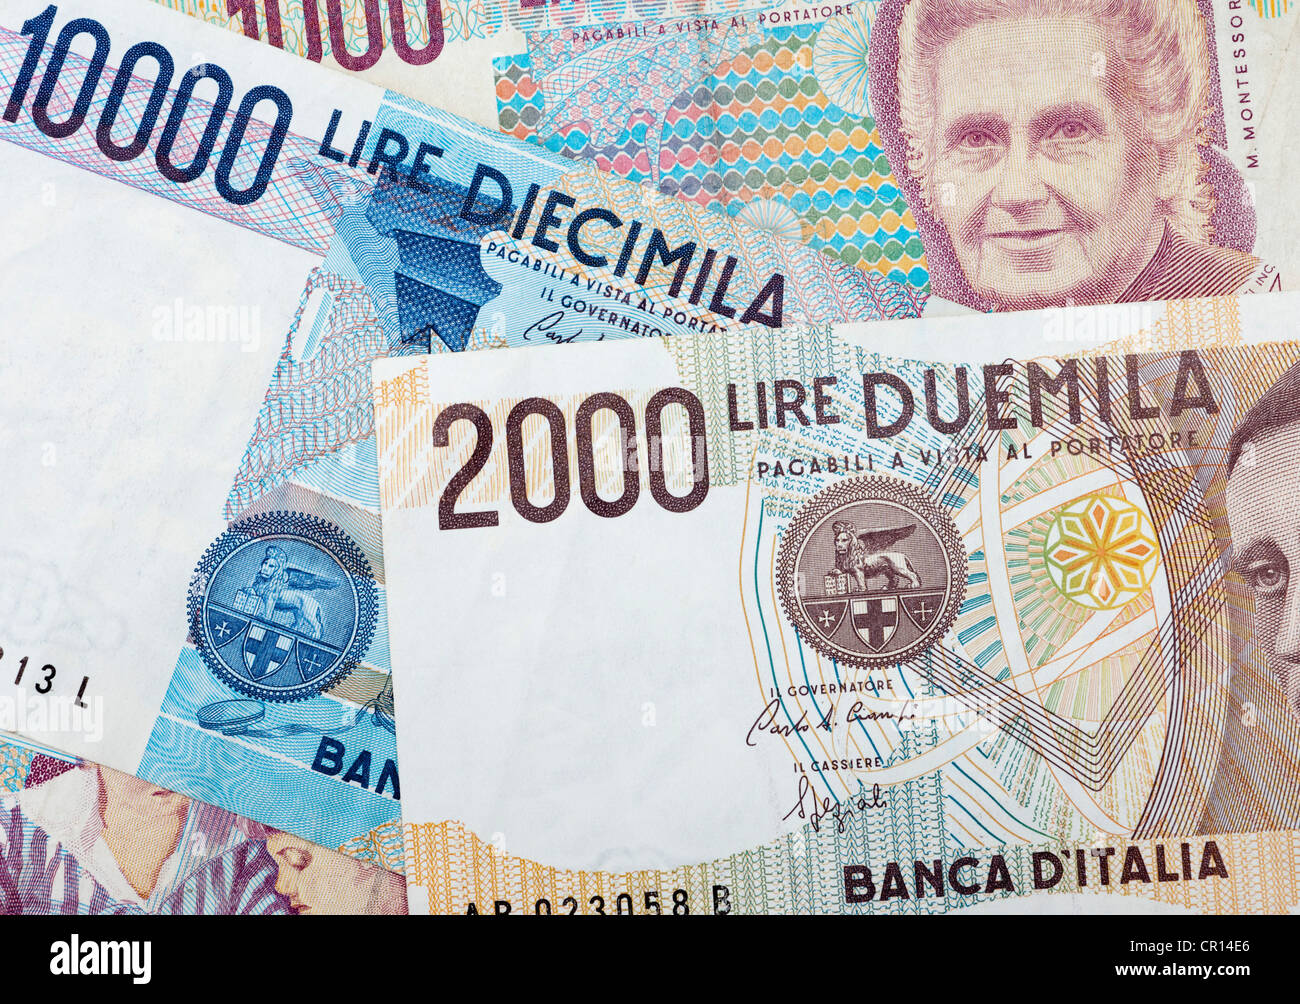 Pre Euro Italian Lire banknotes Stock Photo - Alamy